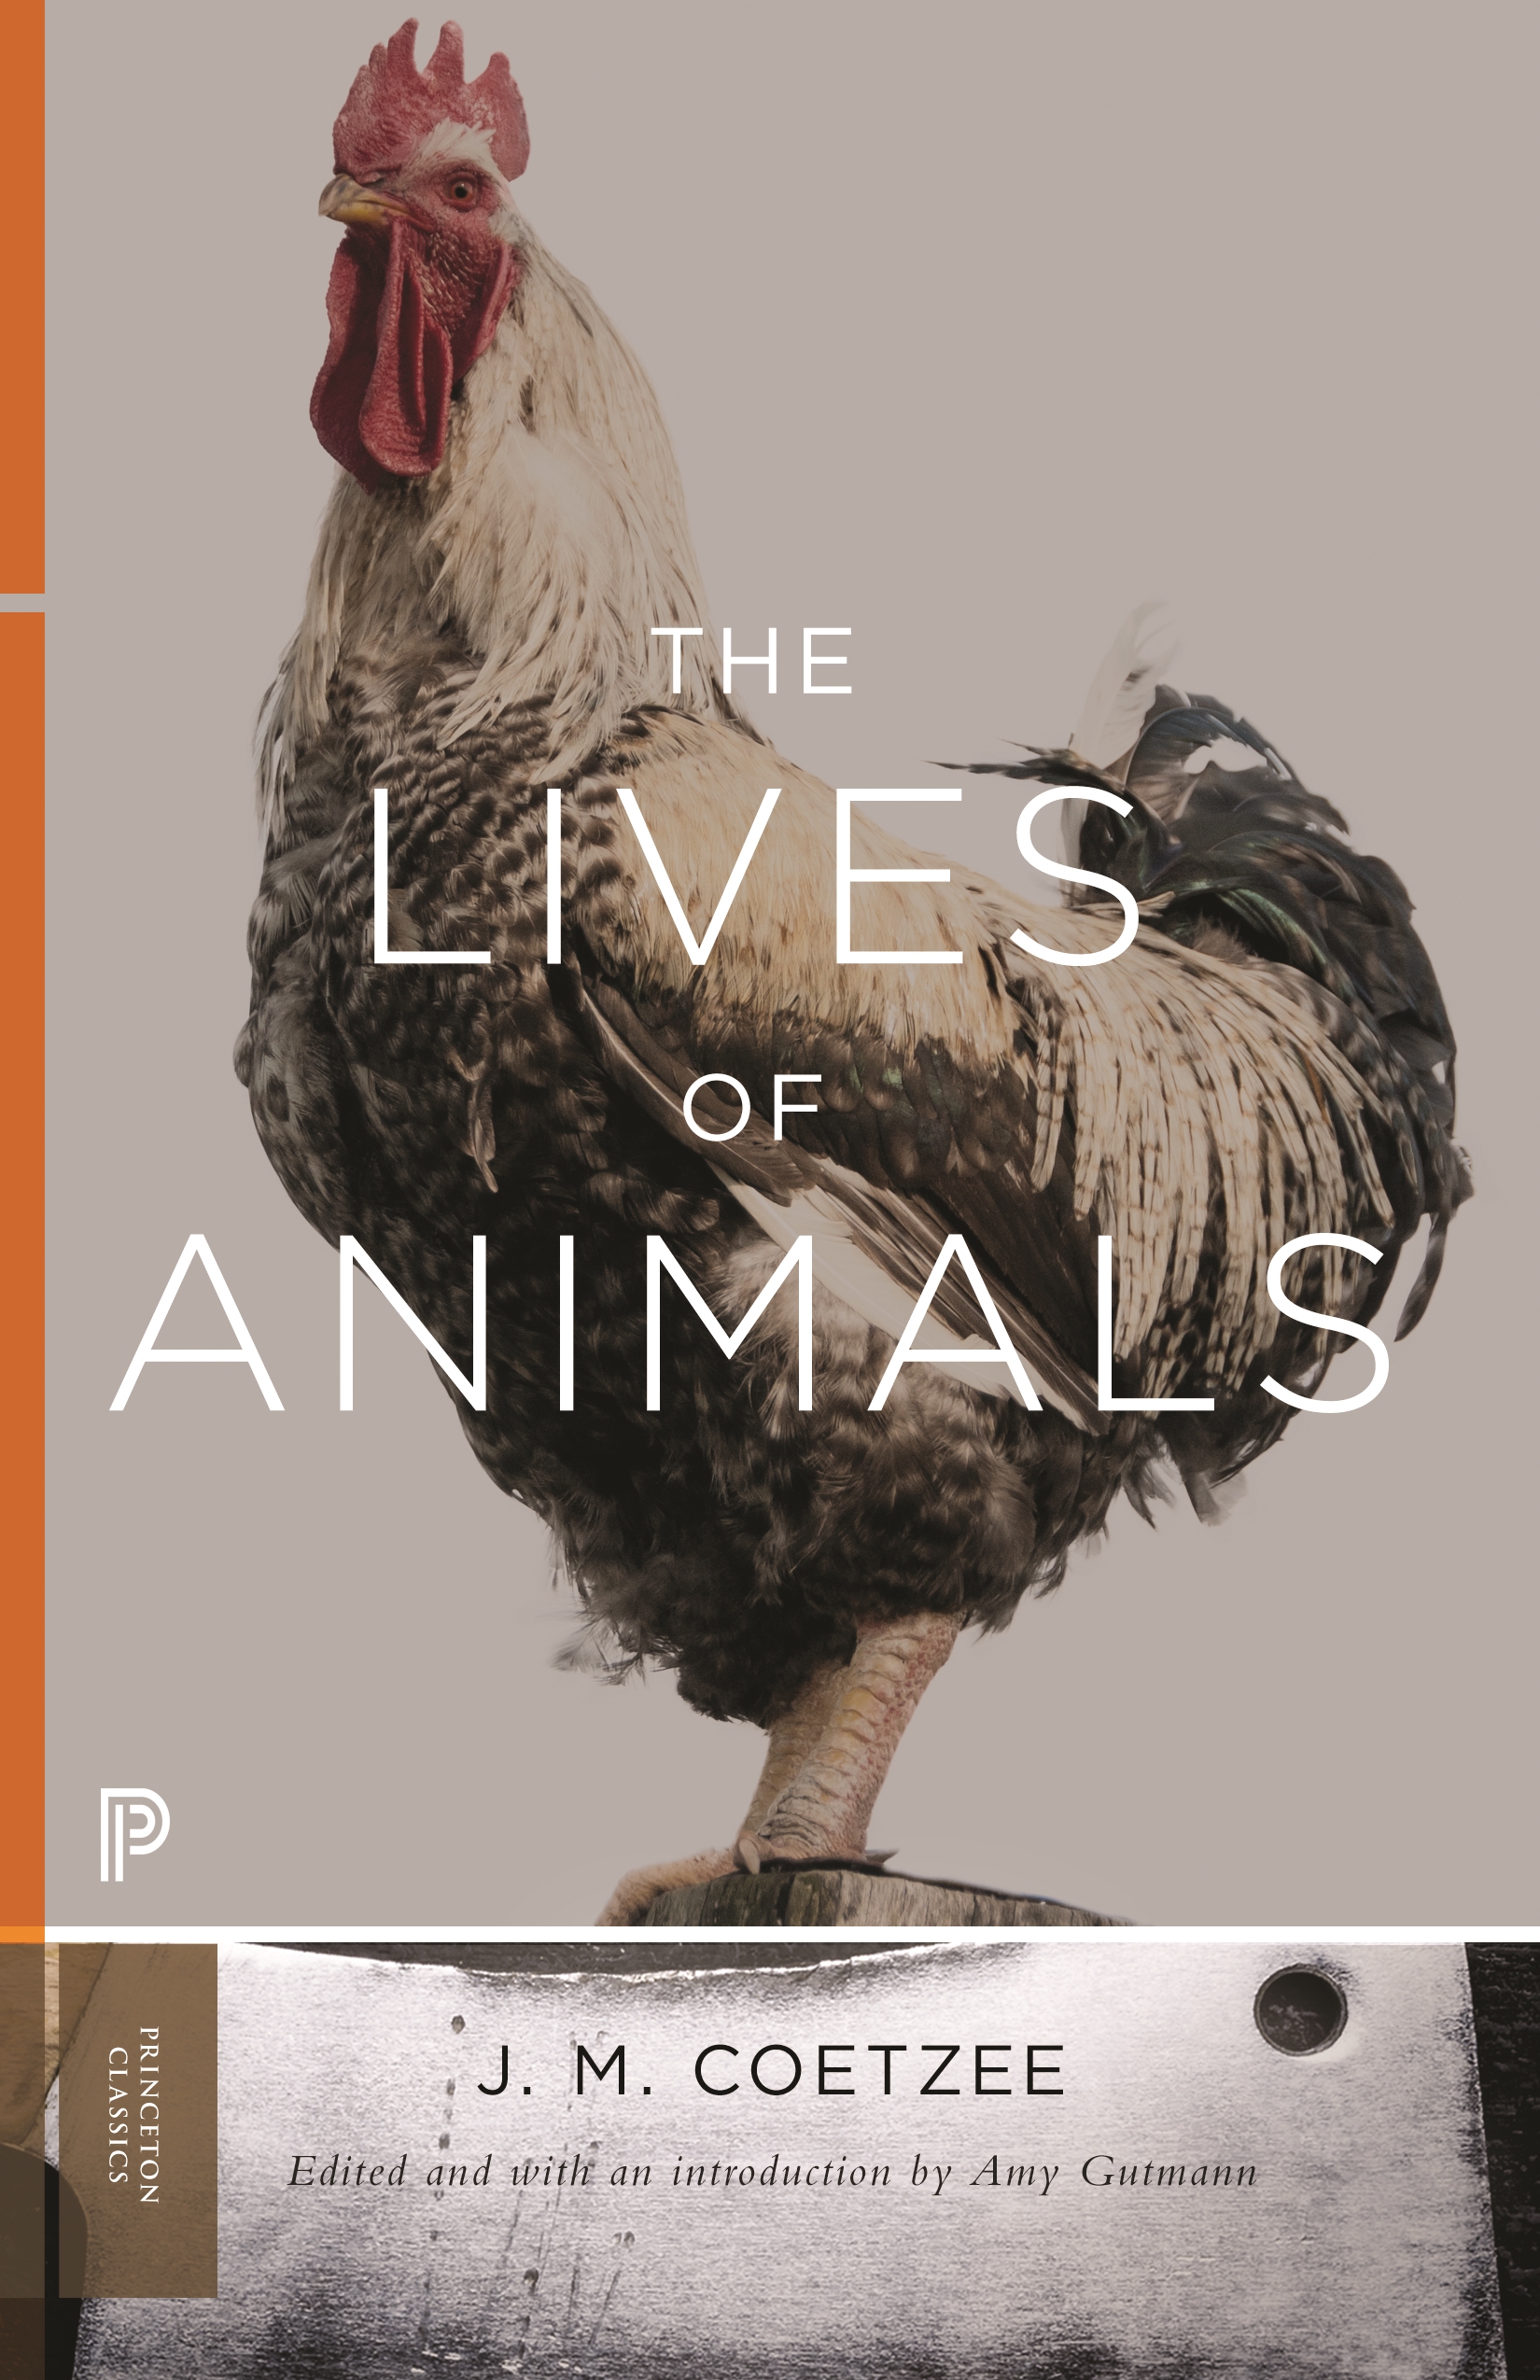 Lives of Animals